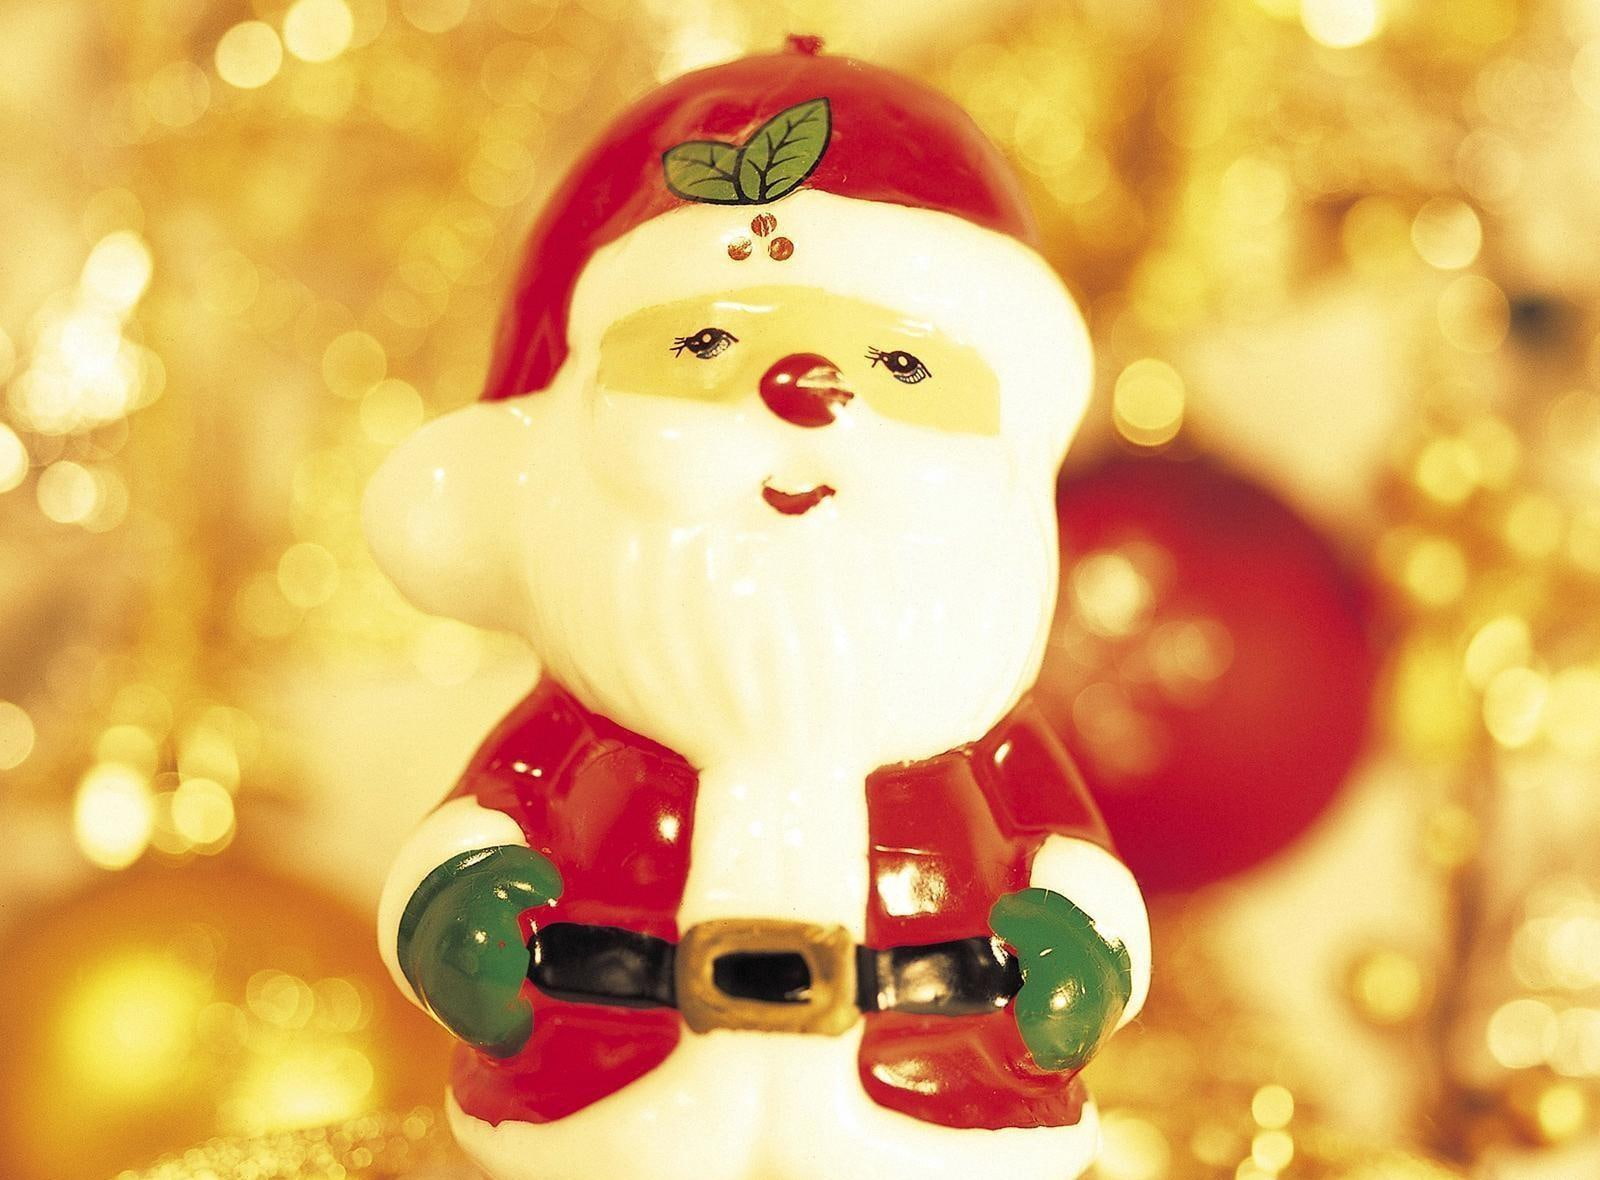 santa claus, toy, christmas, holiday, close-up, santa claus figurine